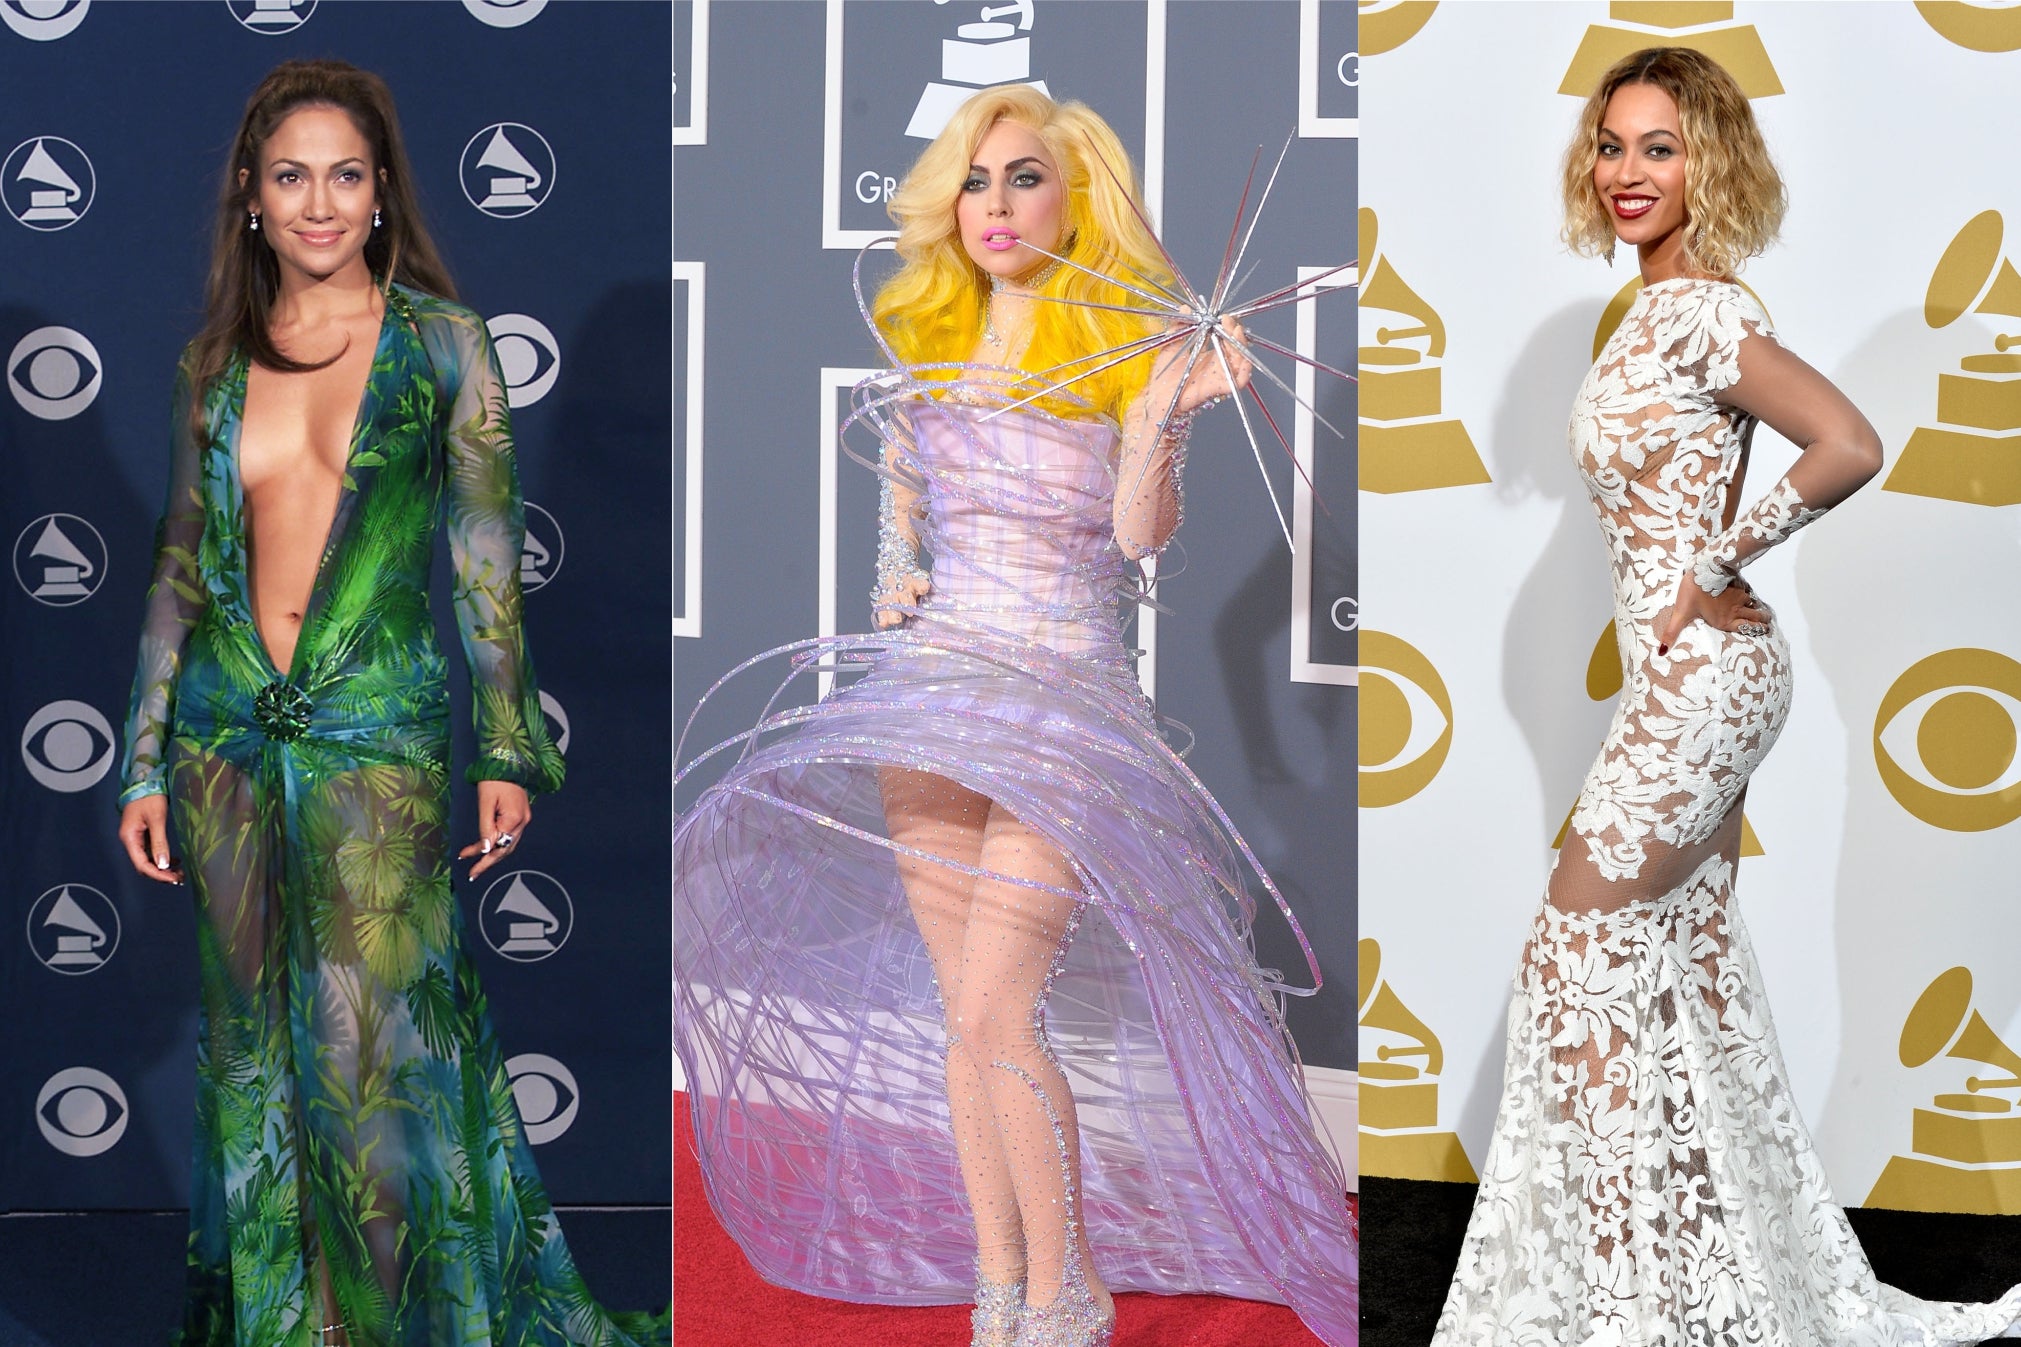 Grammy Awards 2020 Best Fashion Moments Ever From Jennifer Lopez